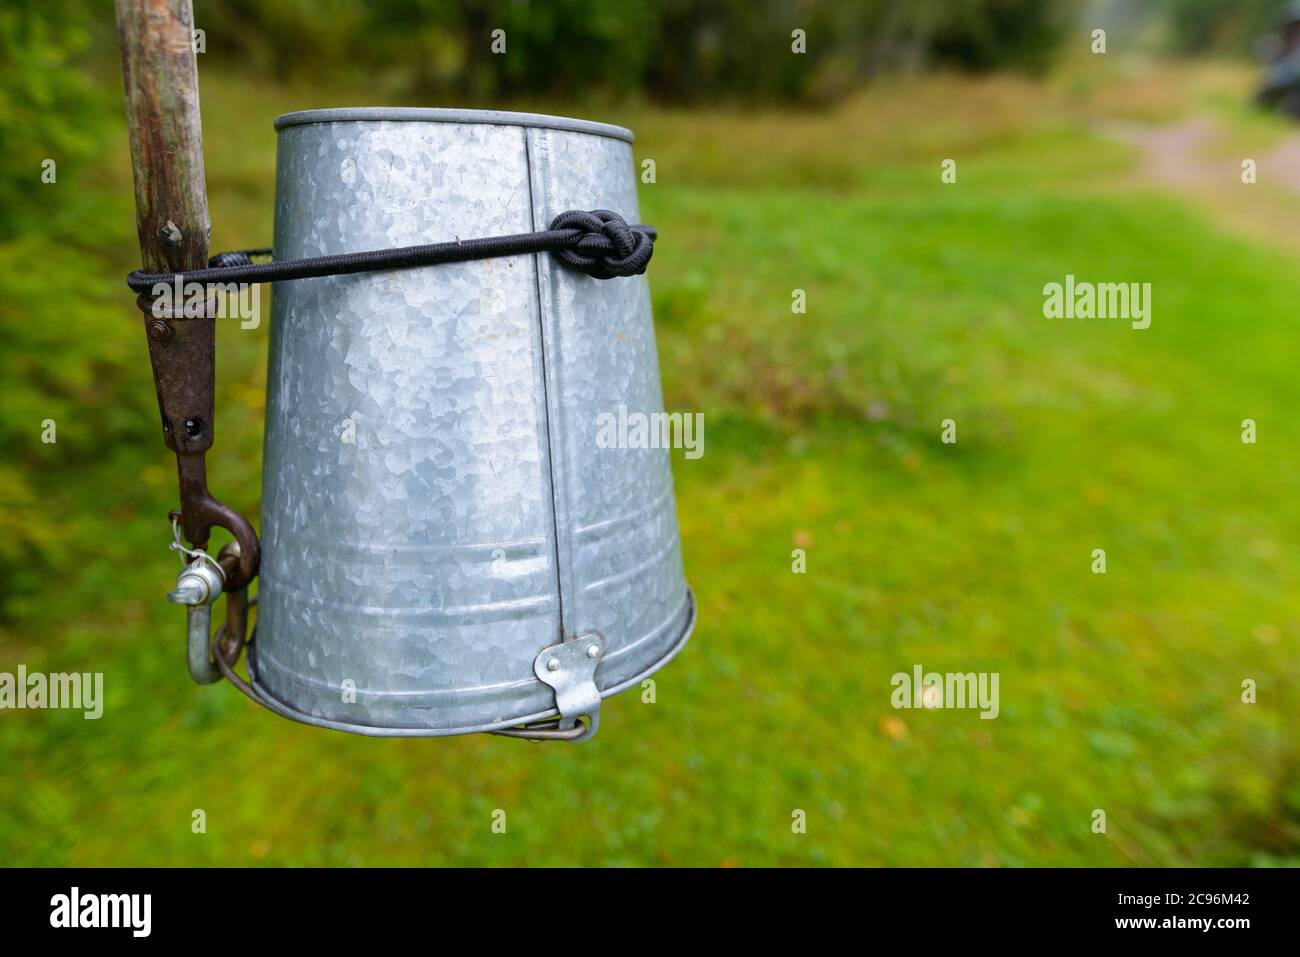 Empty metal bucket tied upside down on stick Stock Photo